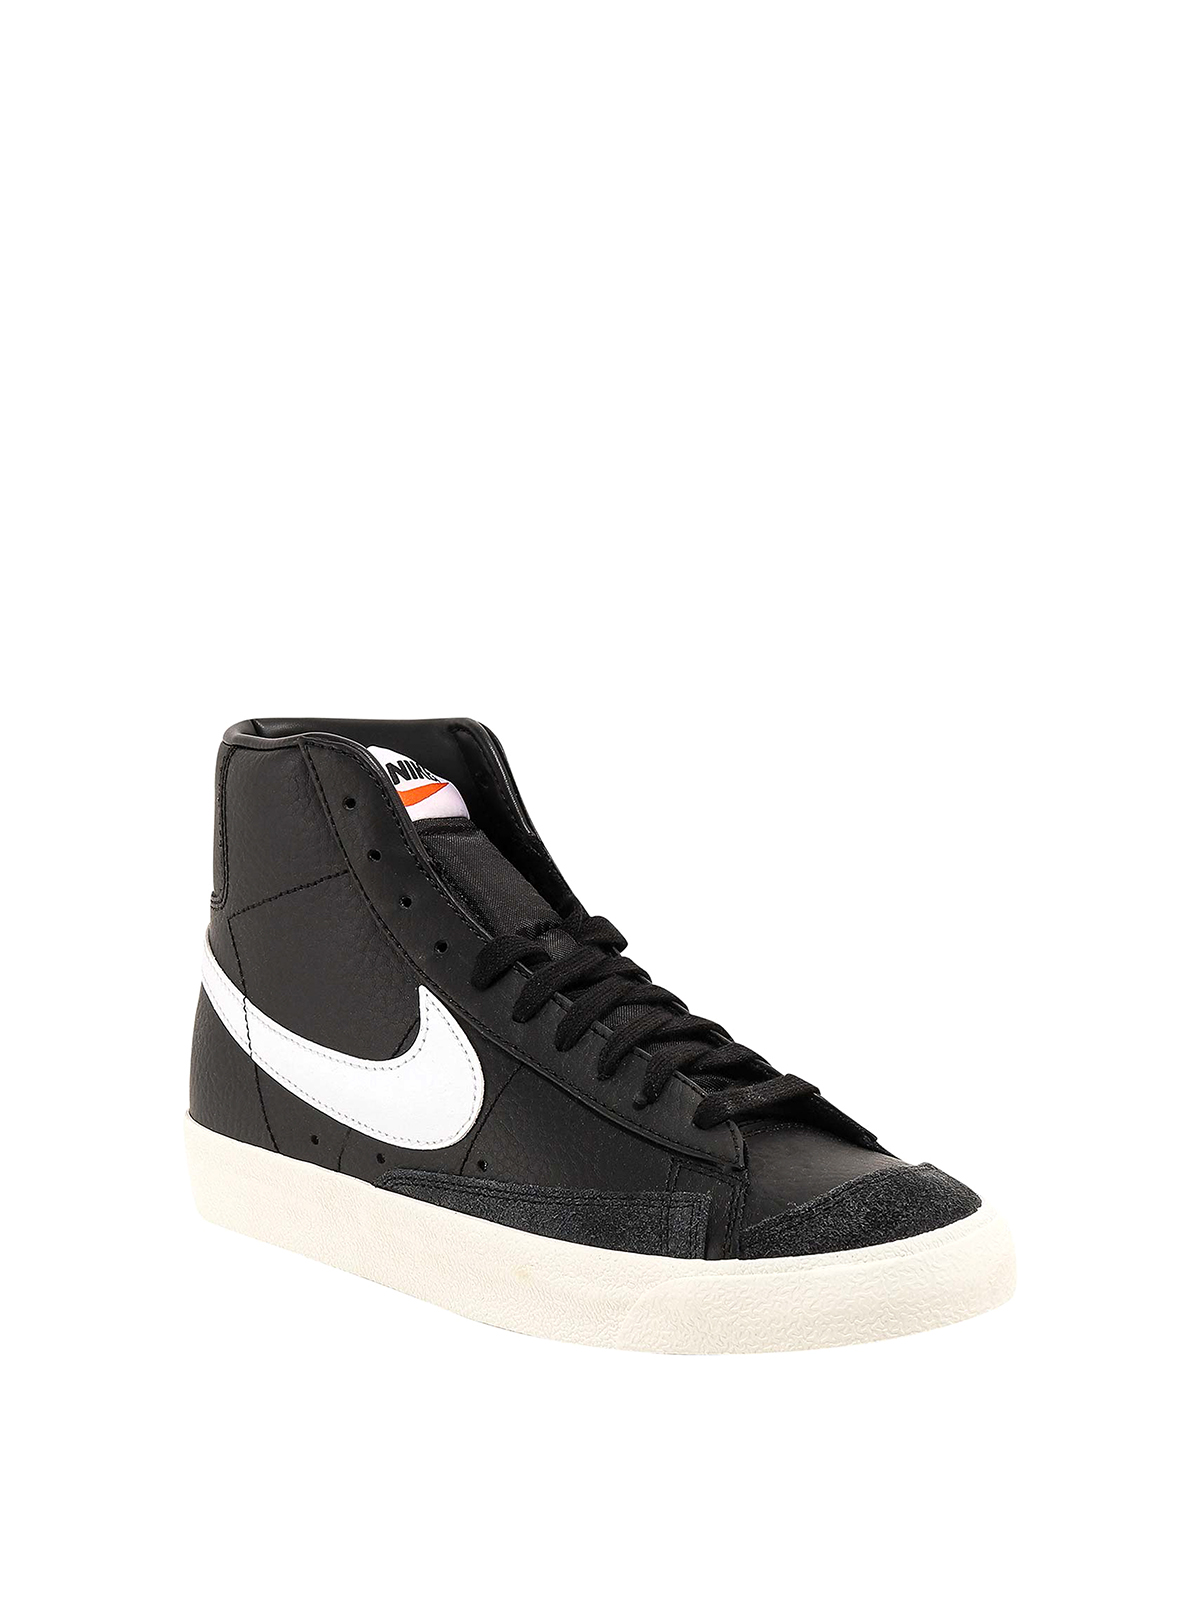 Trainers Nike - Blazer sneakers - BQ6806002 | Shop online at iKRIX